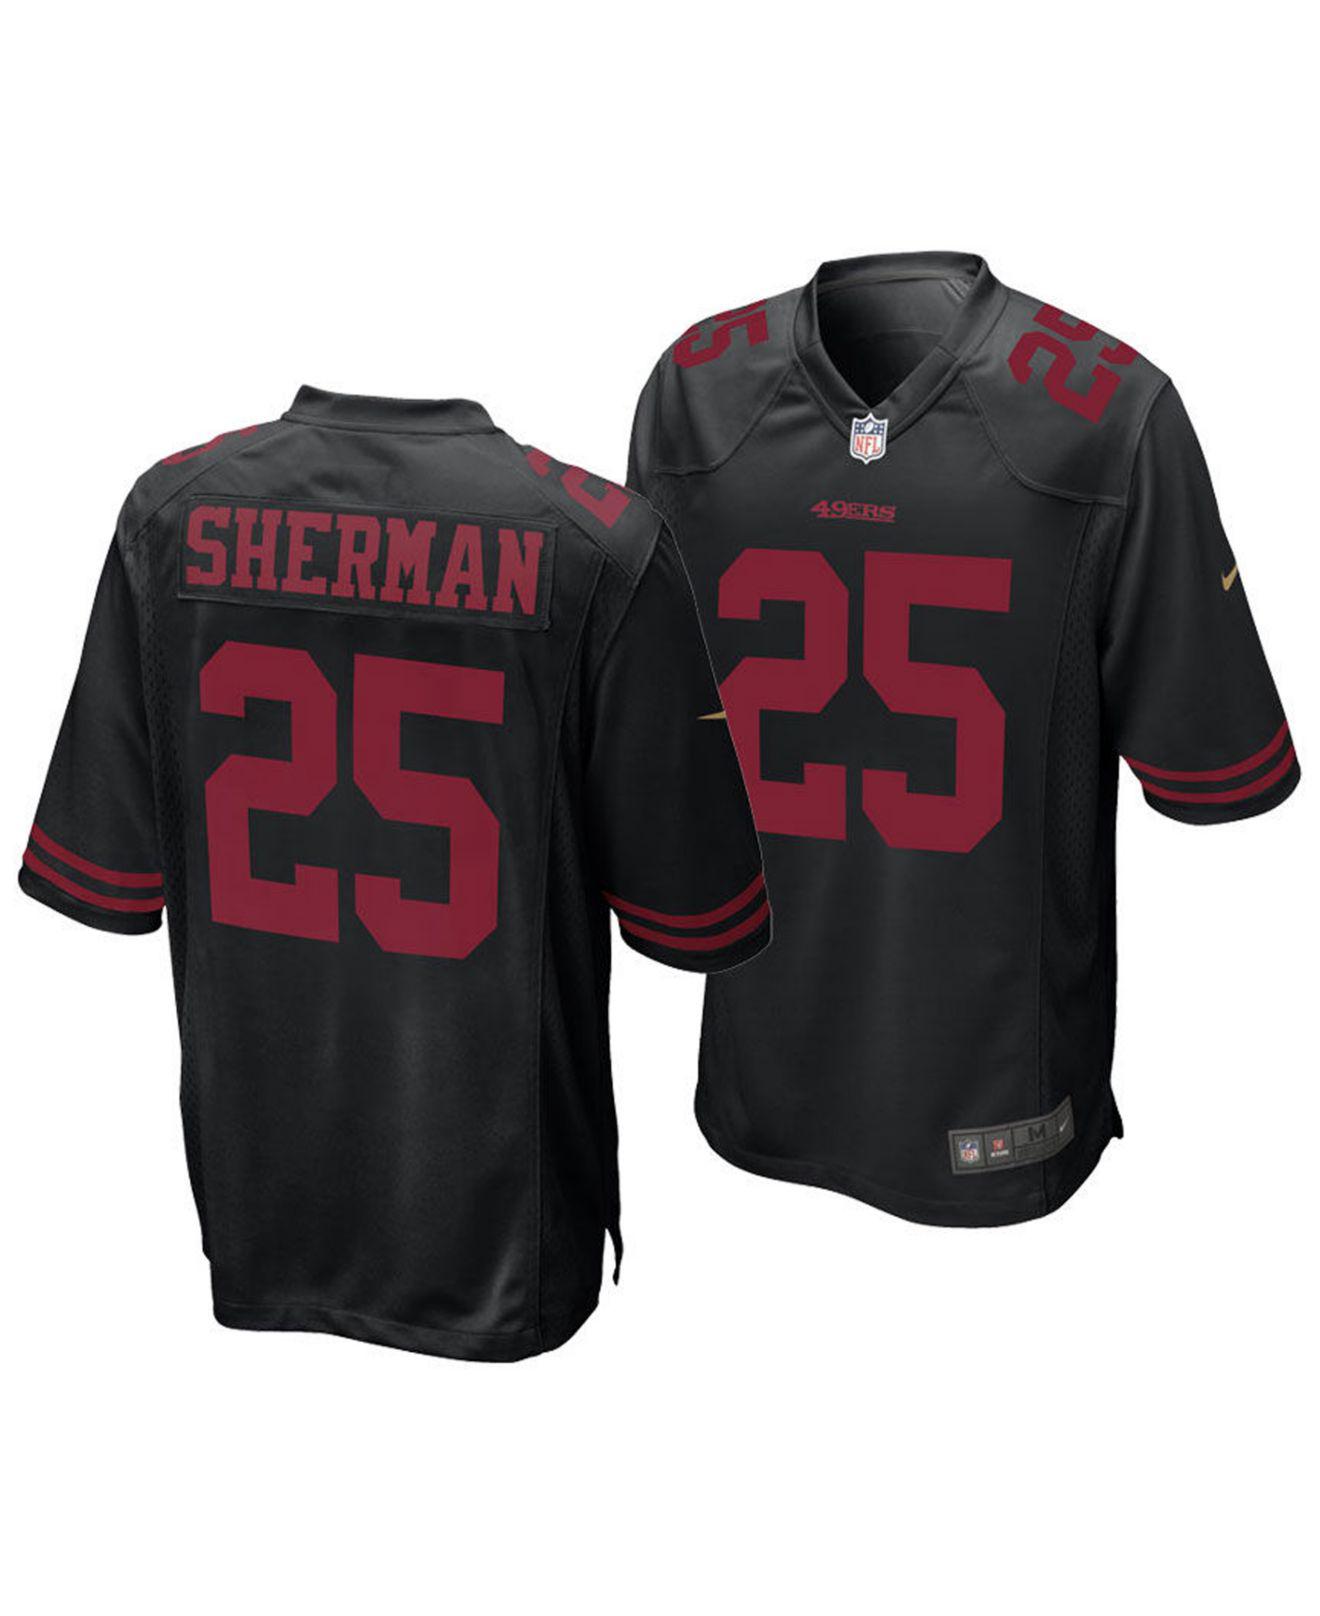 richard sherman black jersey